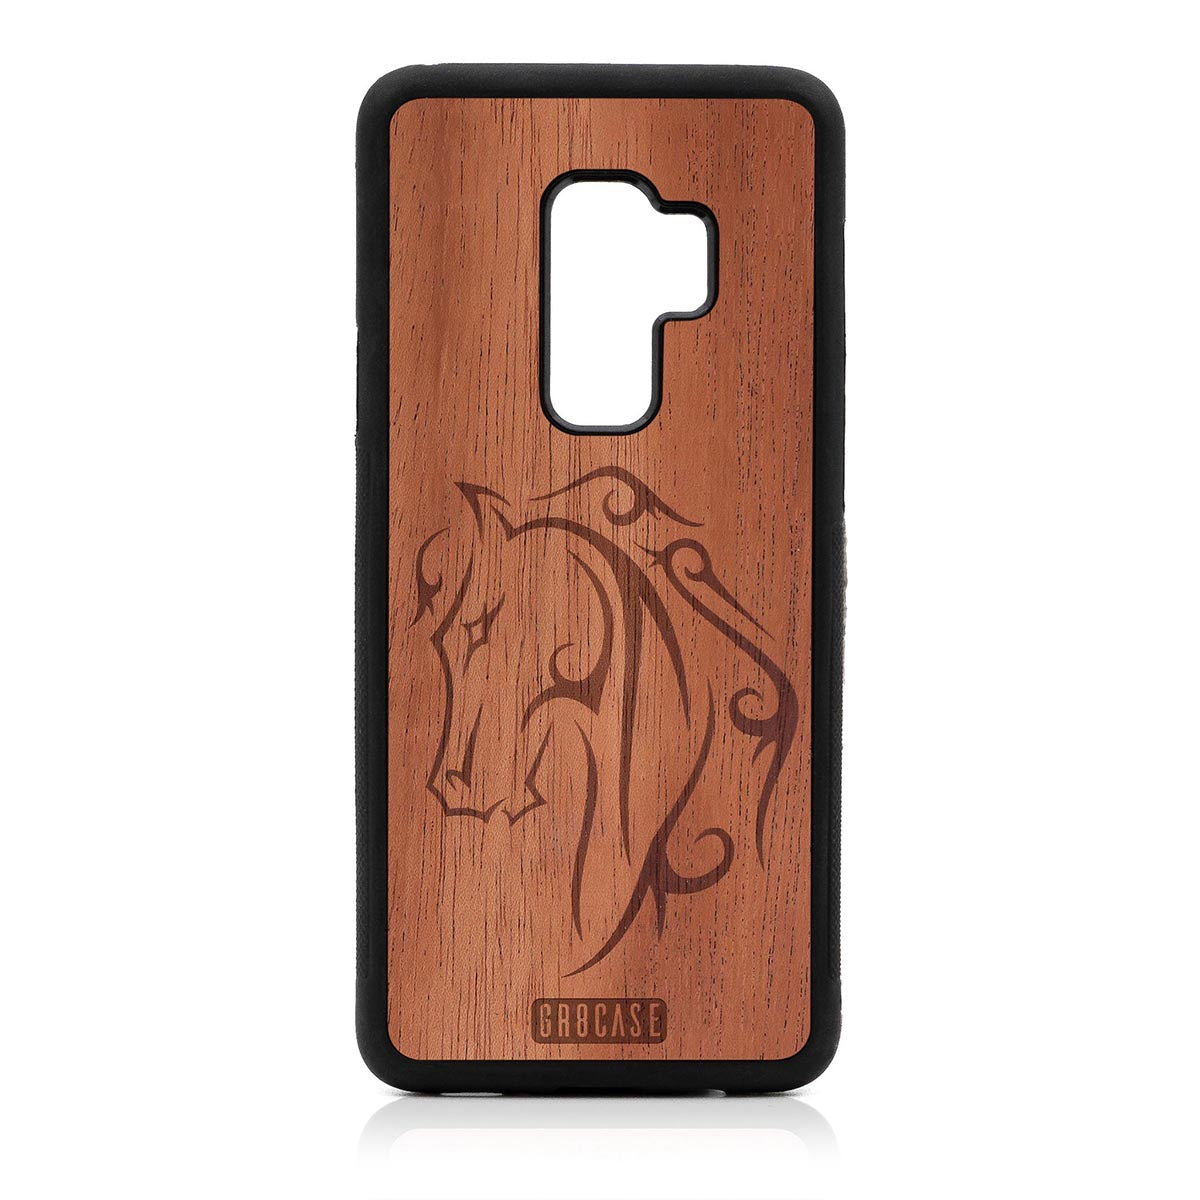 Horse Tattoo Design Wood Case Samsung Galaxy S9 Plus by GR8CASE